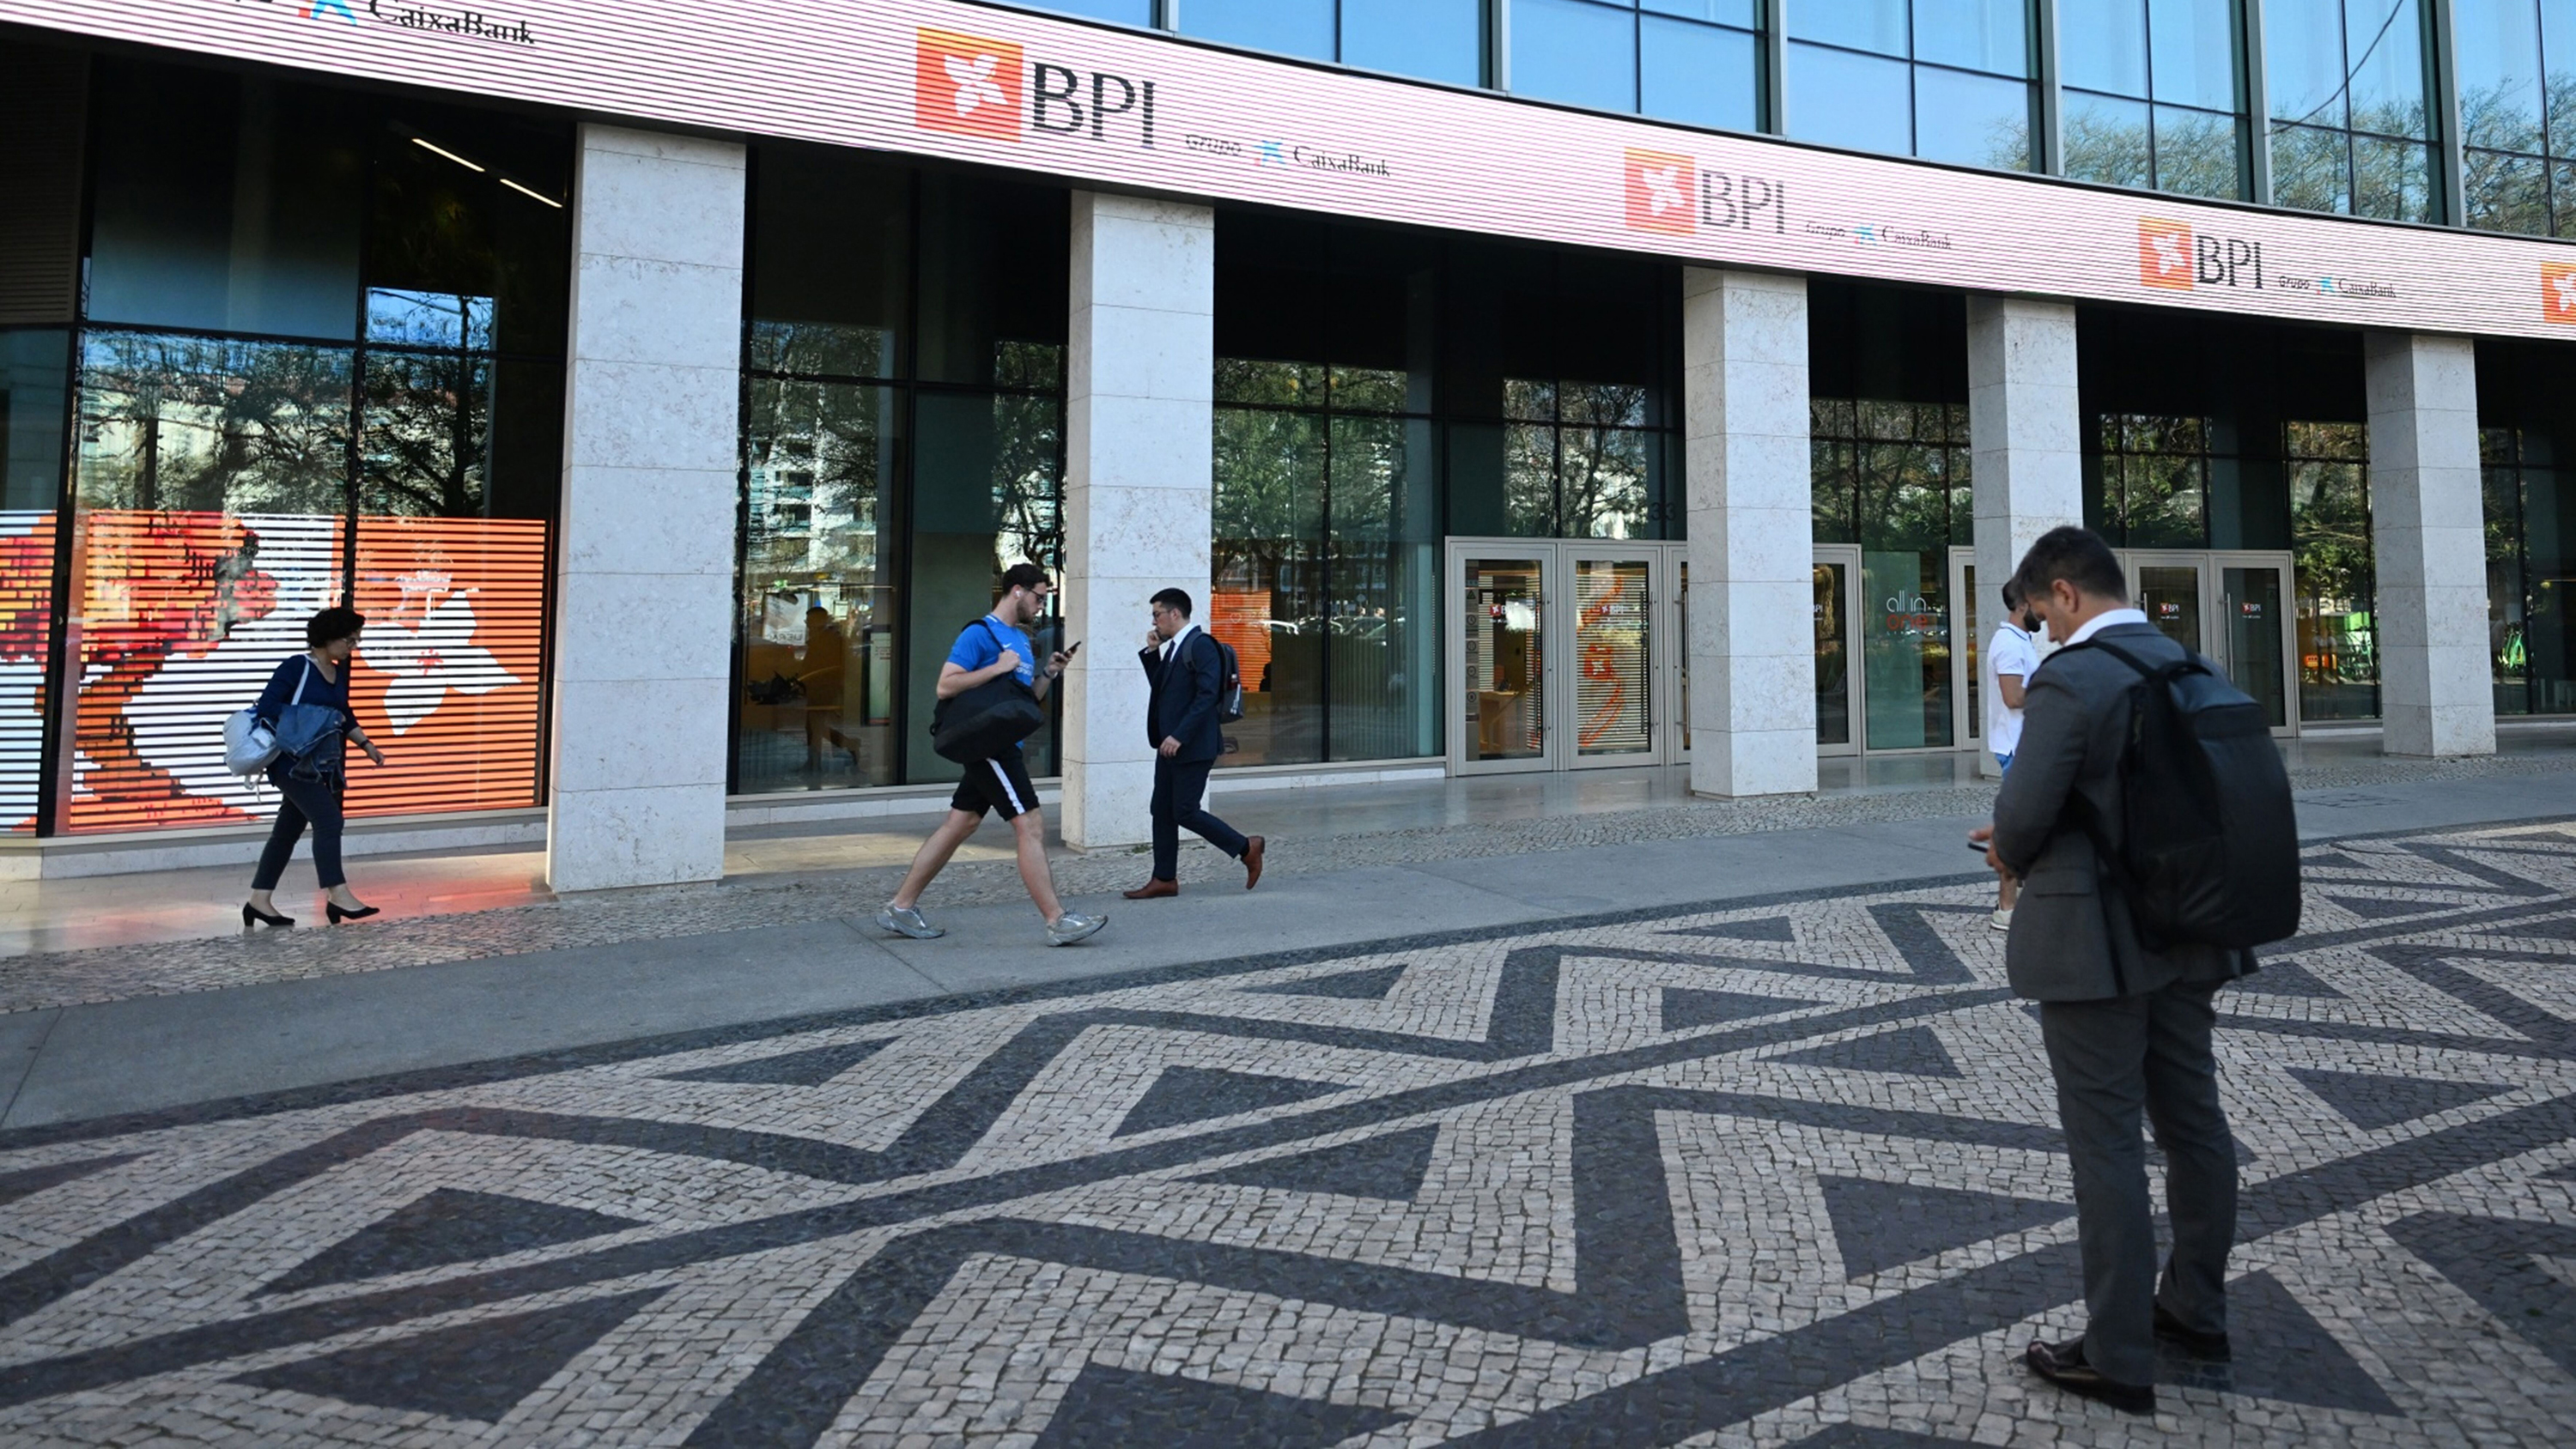 A branch of BPI